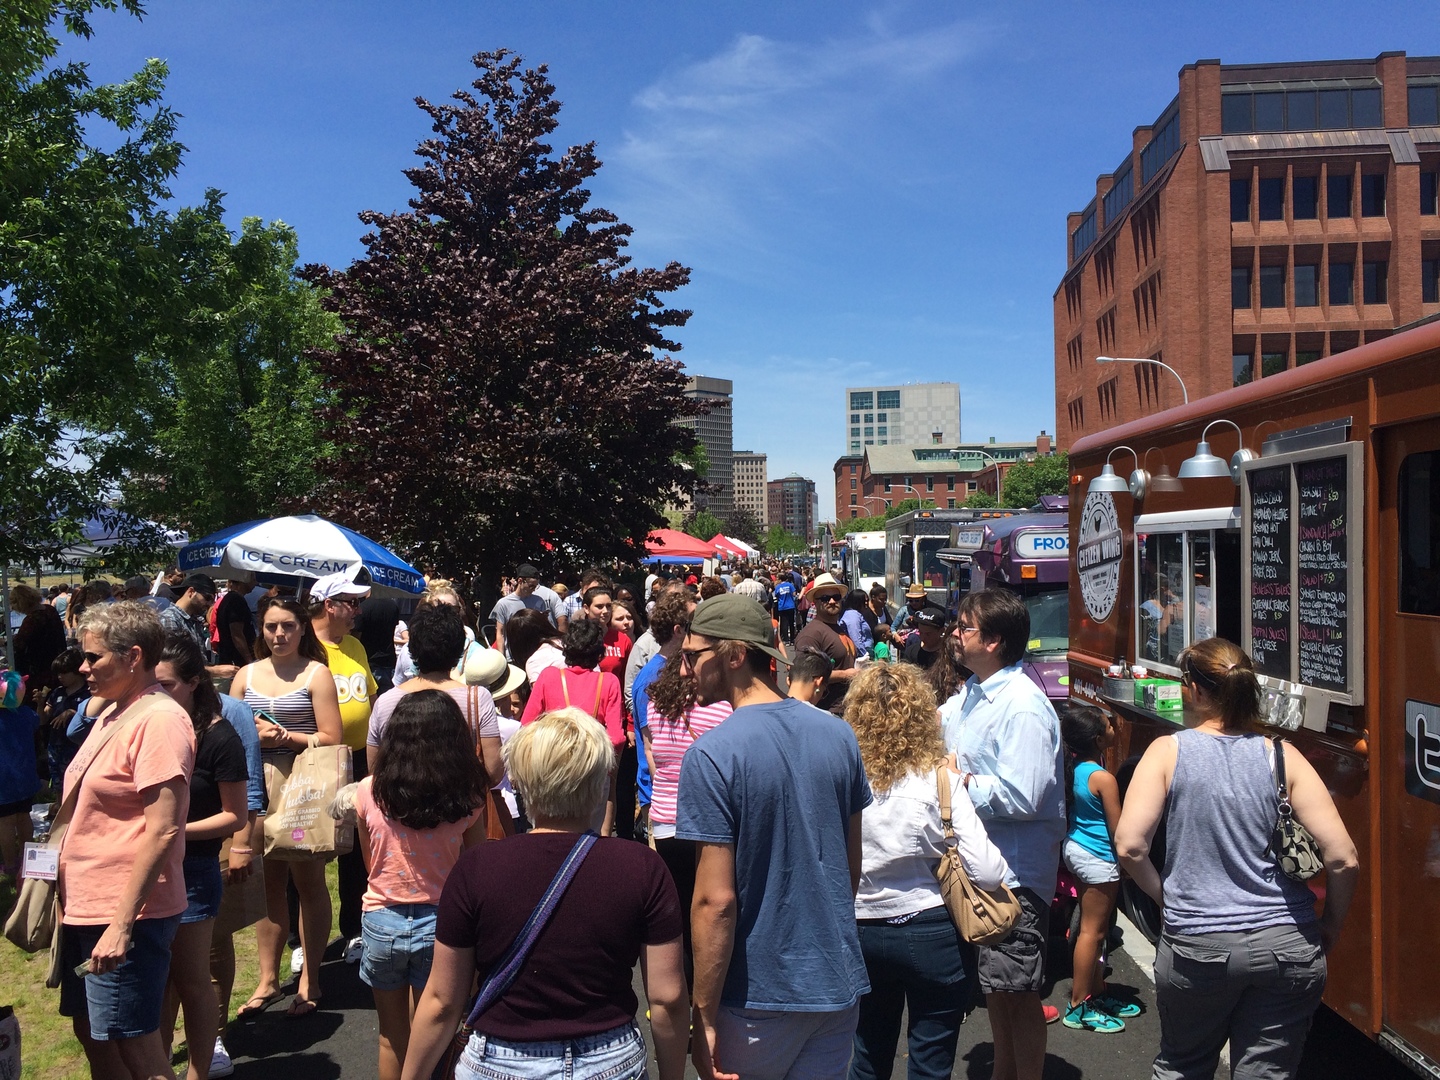 Providence Flea Summer Markets!, Providence, Rhode Island, United States